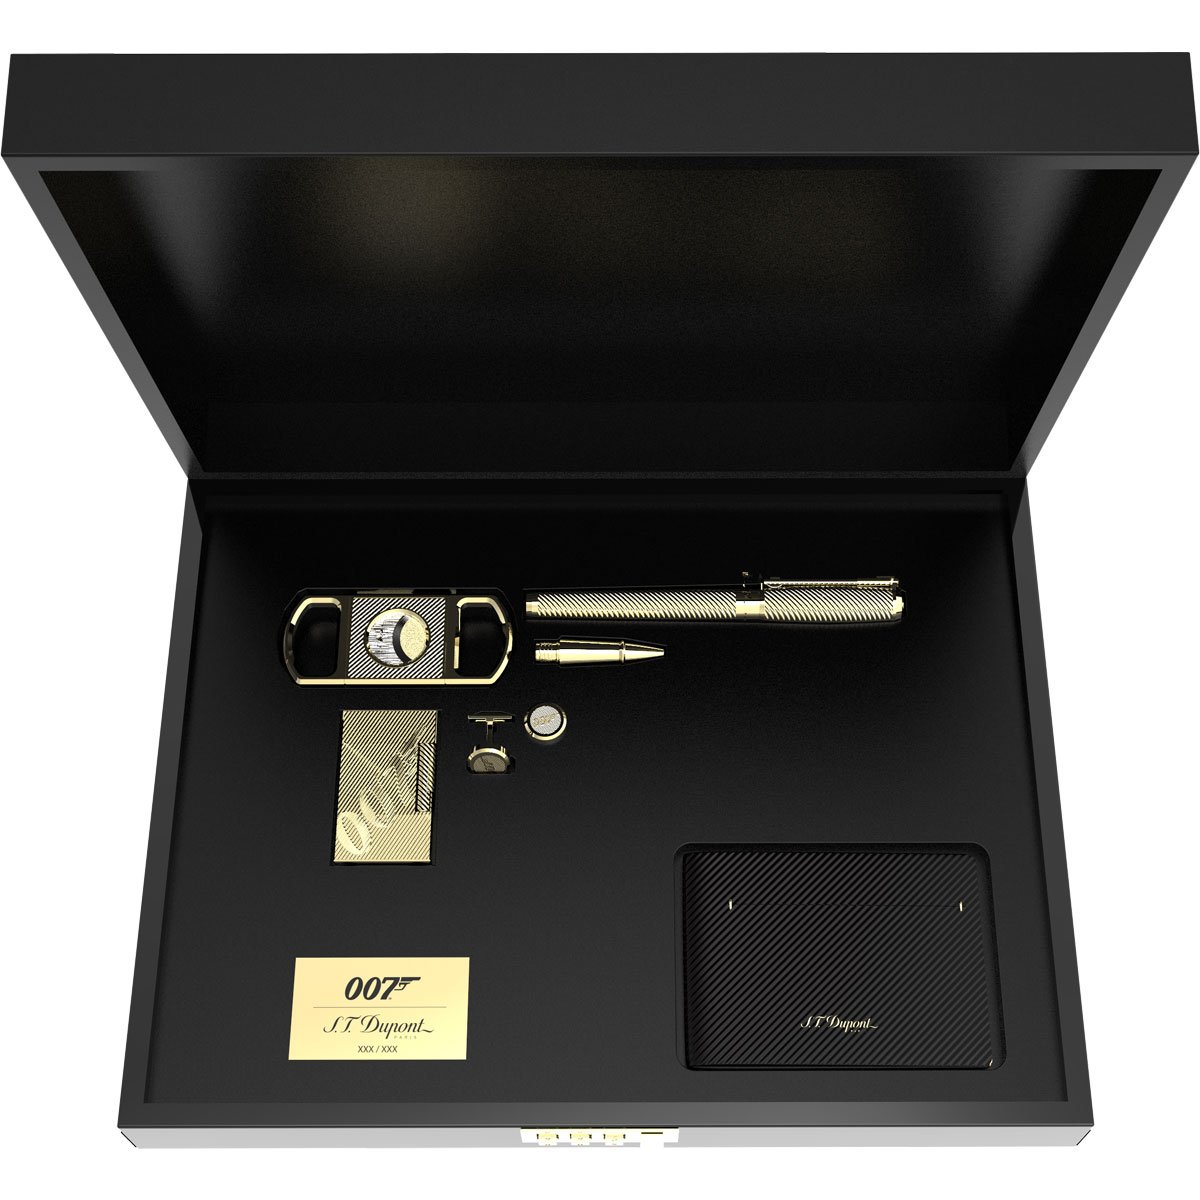 ST Dupont James Bond 007 Collector Set - Gold - Limited Edition